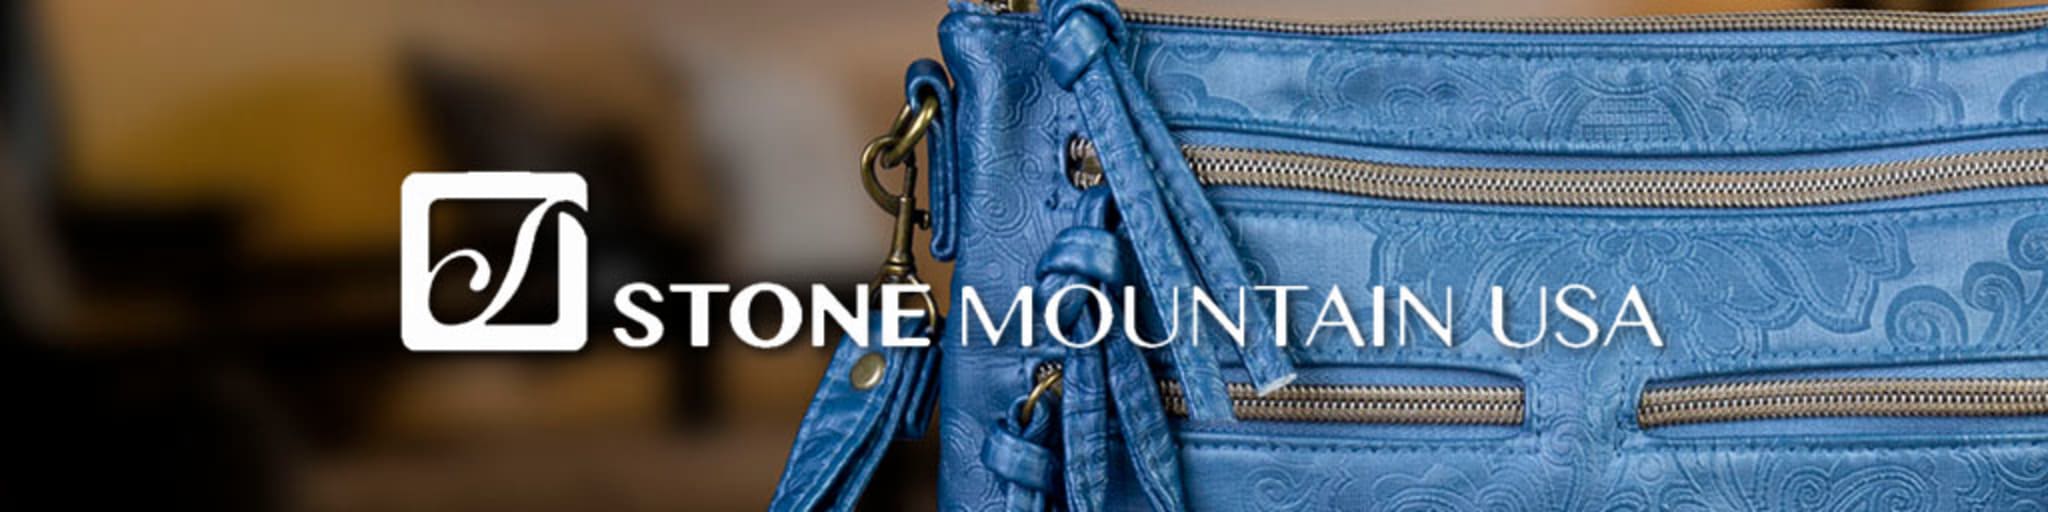 stone mountain handbags clearance